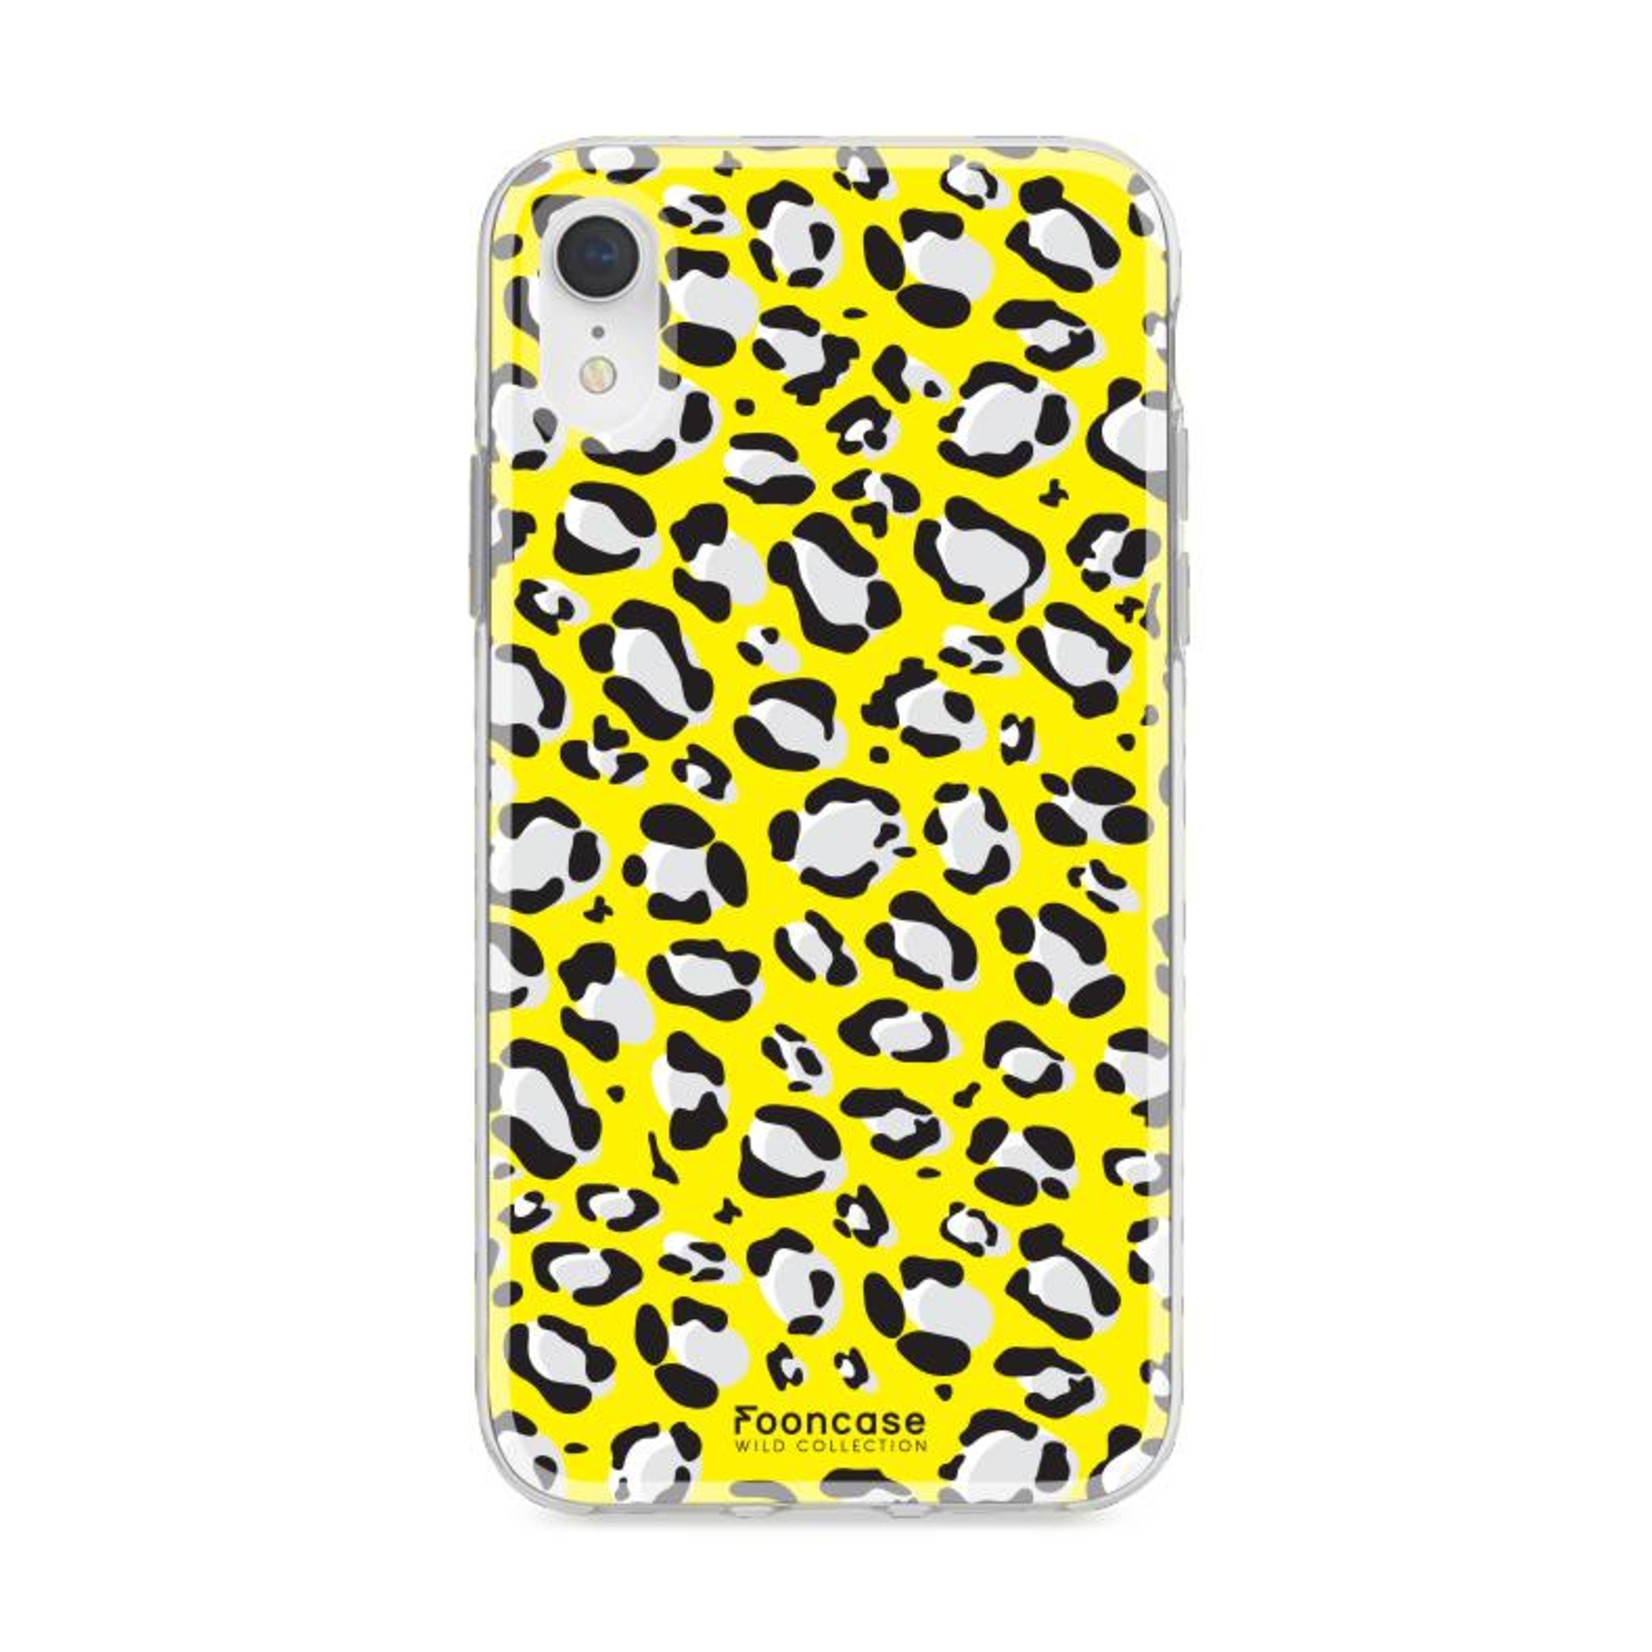 FOONCASE iPhone XR hoesje TPU Soft Case - Back Cover - Luipaard / Leopard print / Geel